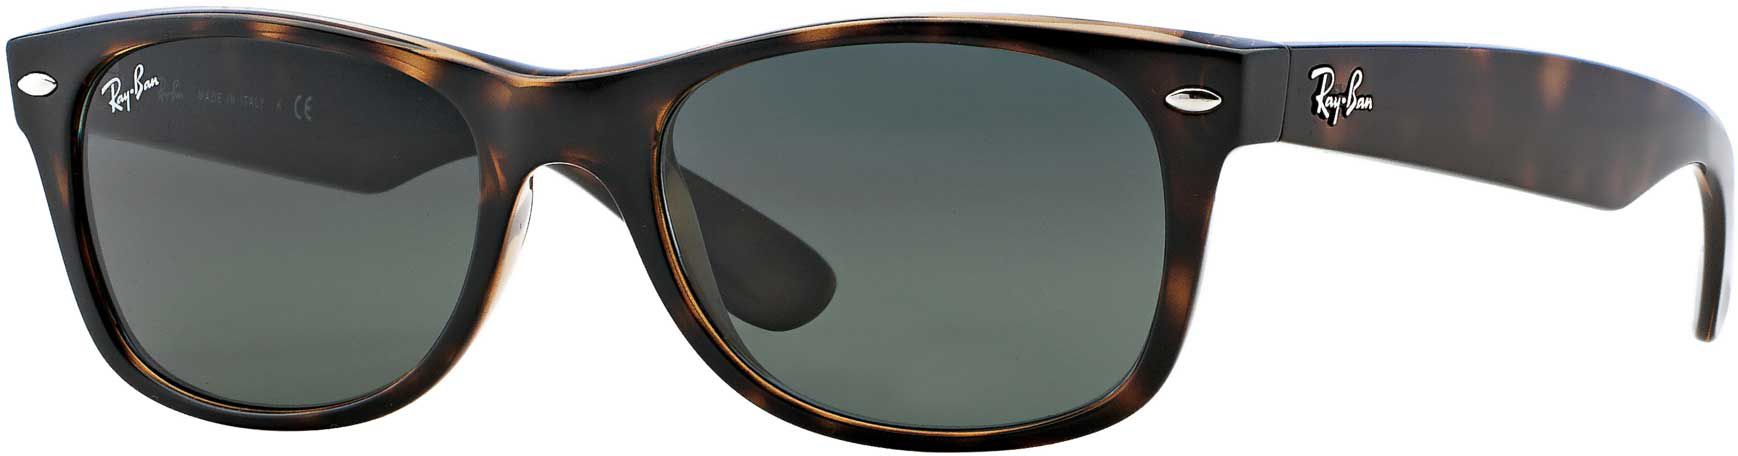 Photos - Sunglasses Ray-Ban New Wayfarer Classic , Men's, Tortoise/Crystal Green 18R 